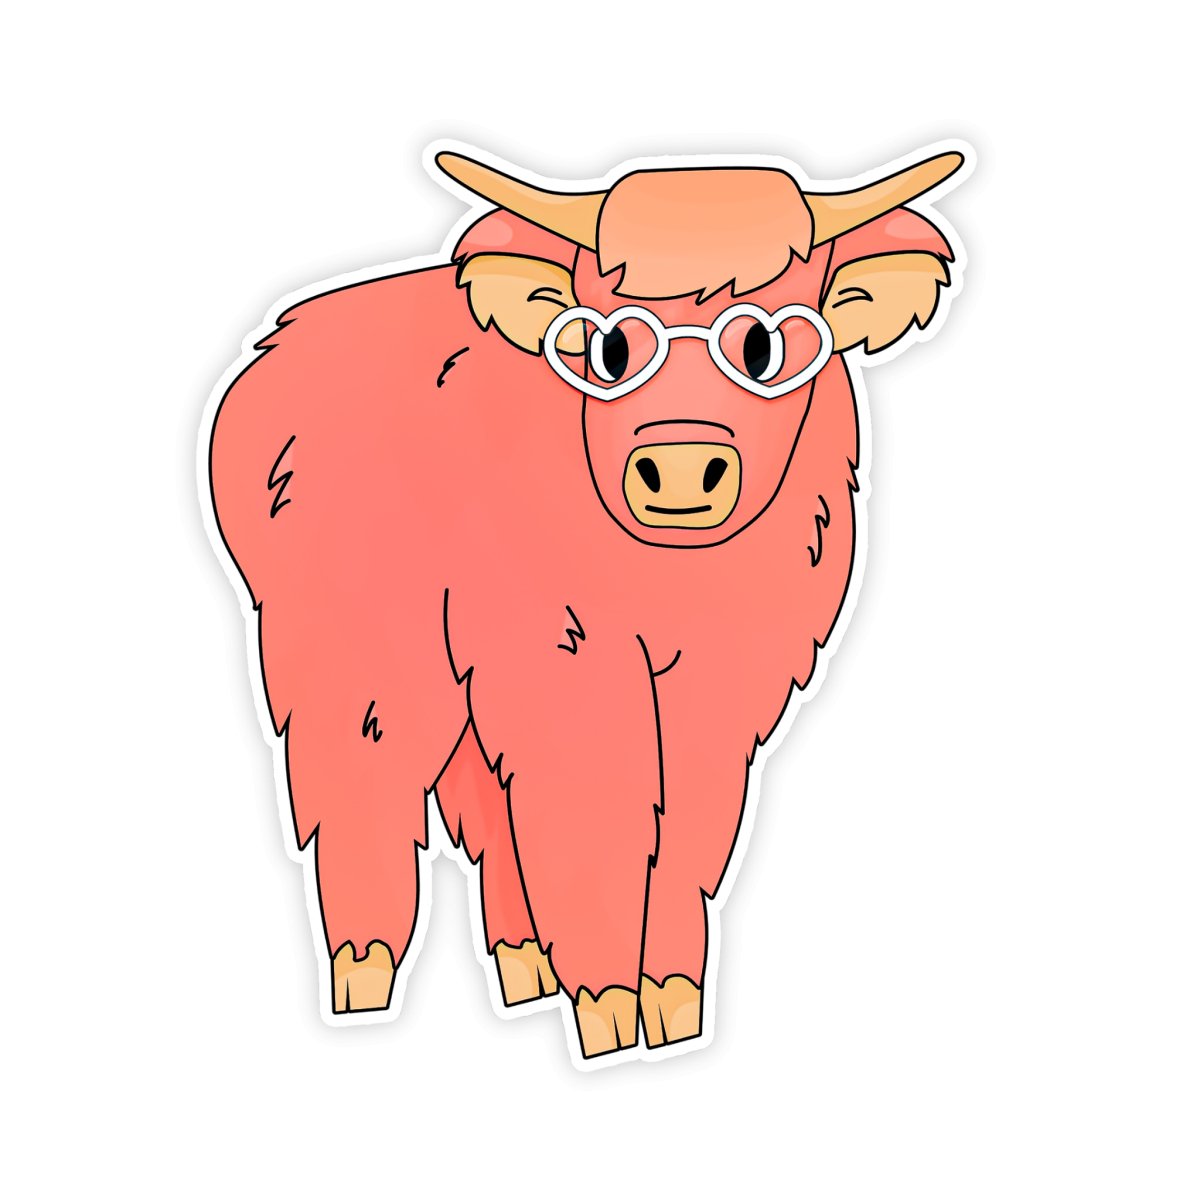 Cute Highland Cow Sticker - stickerbullCute Highland Cow StickerRetail StickerstickerbullstickerbullTaylor_PinkCow [#273]Cute Highland Cow Sticker